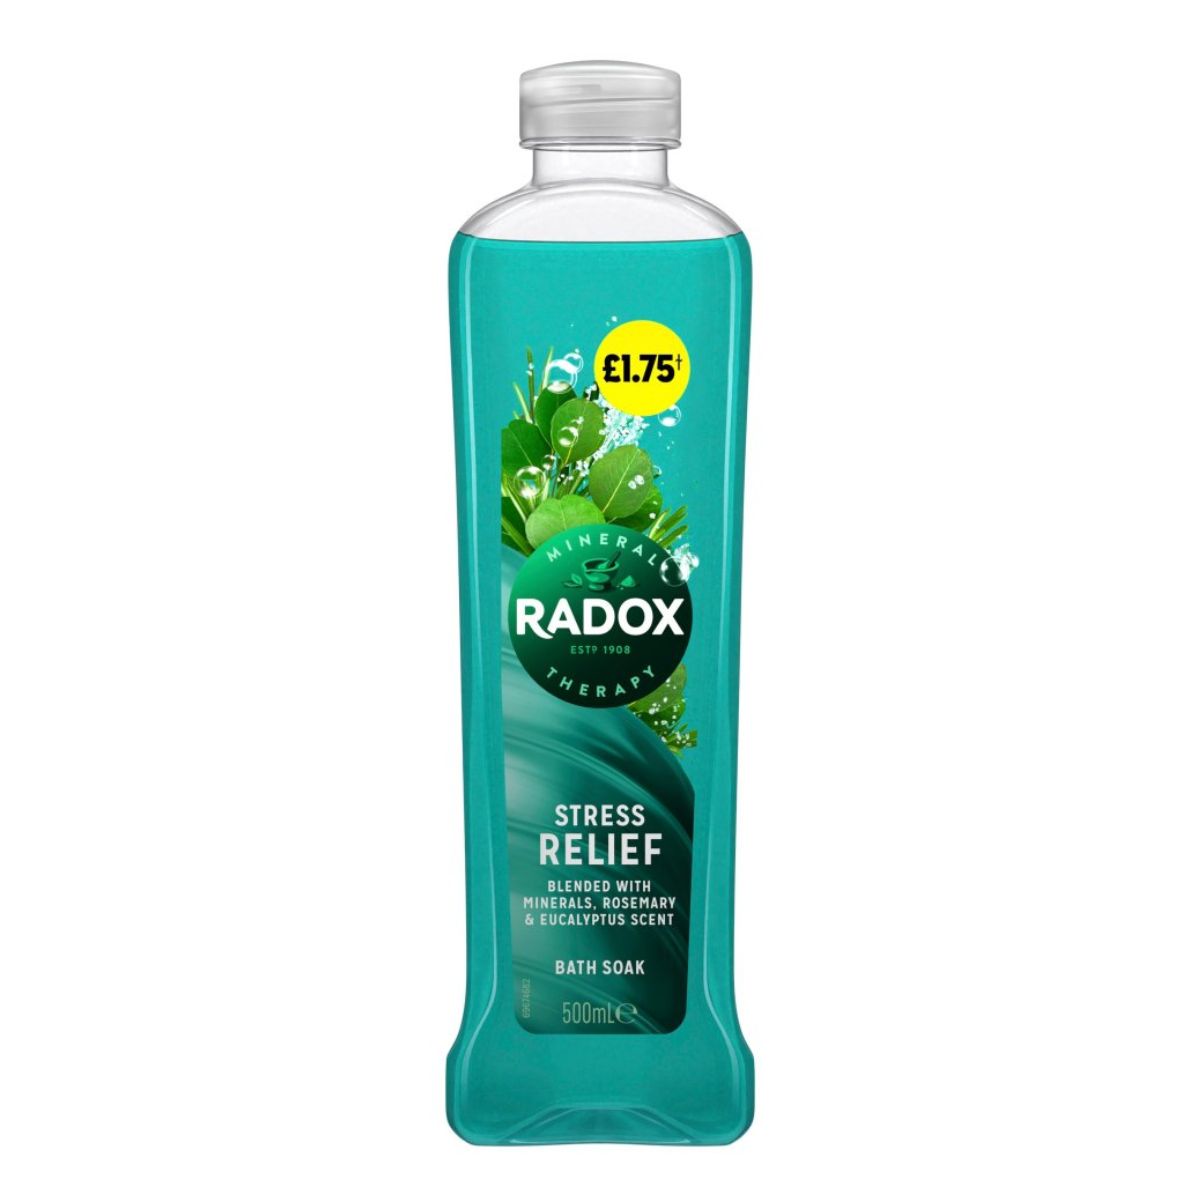 A bottle of Radox - Bath Soak Stress Relief - 500ml on a white background.